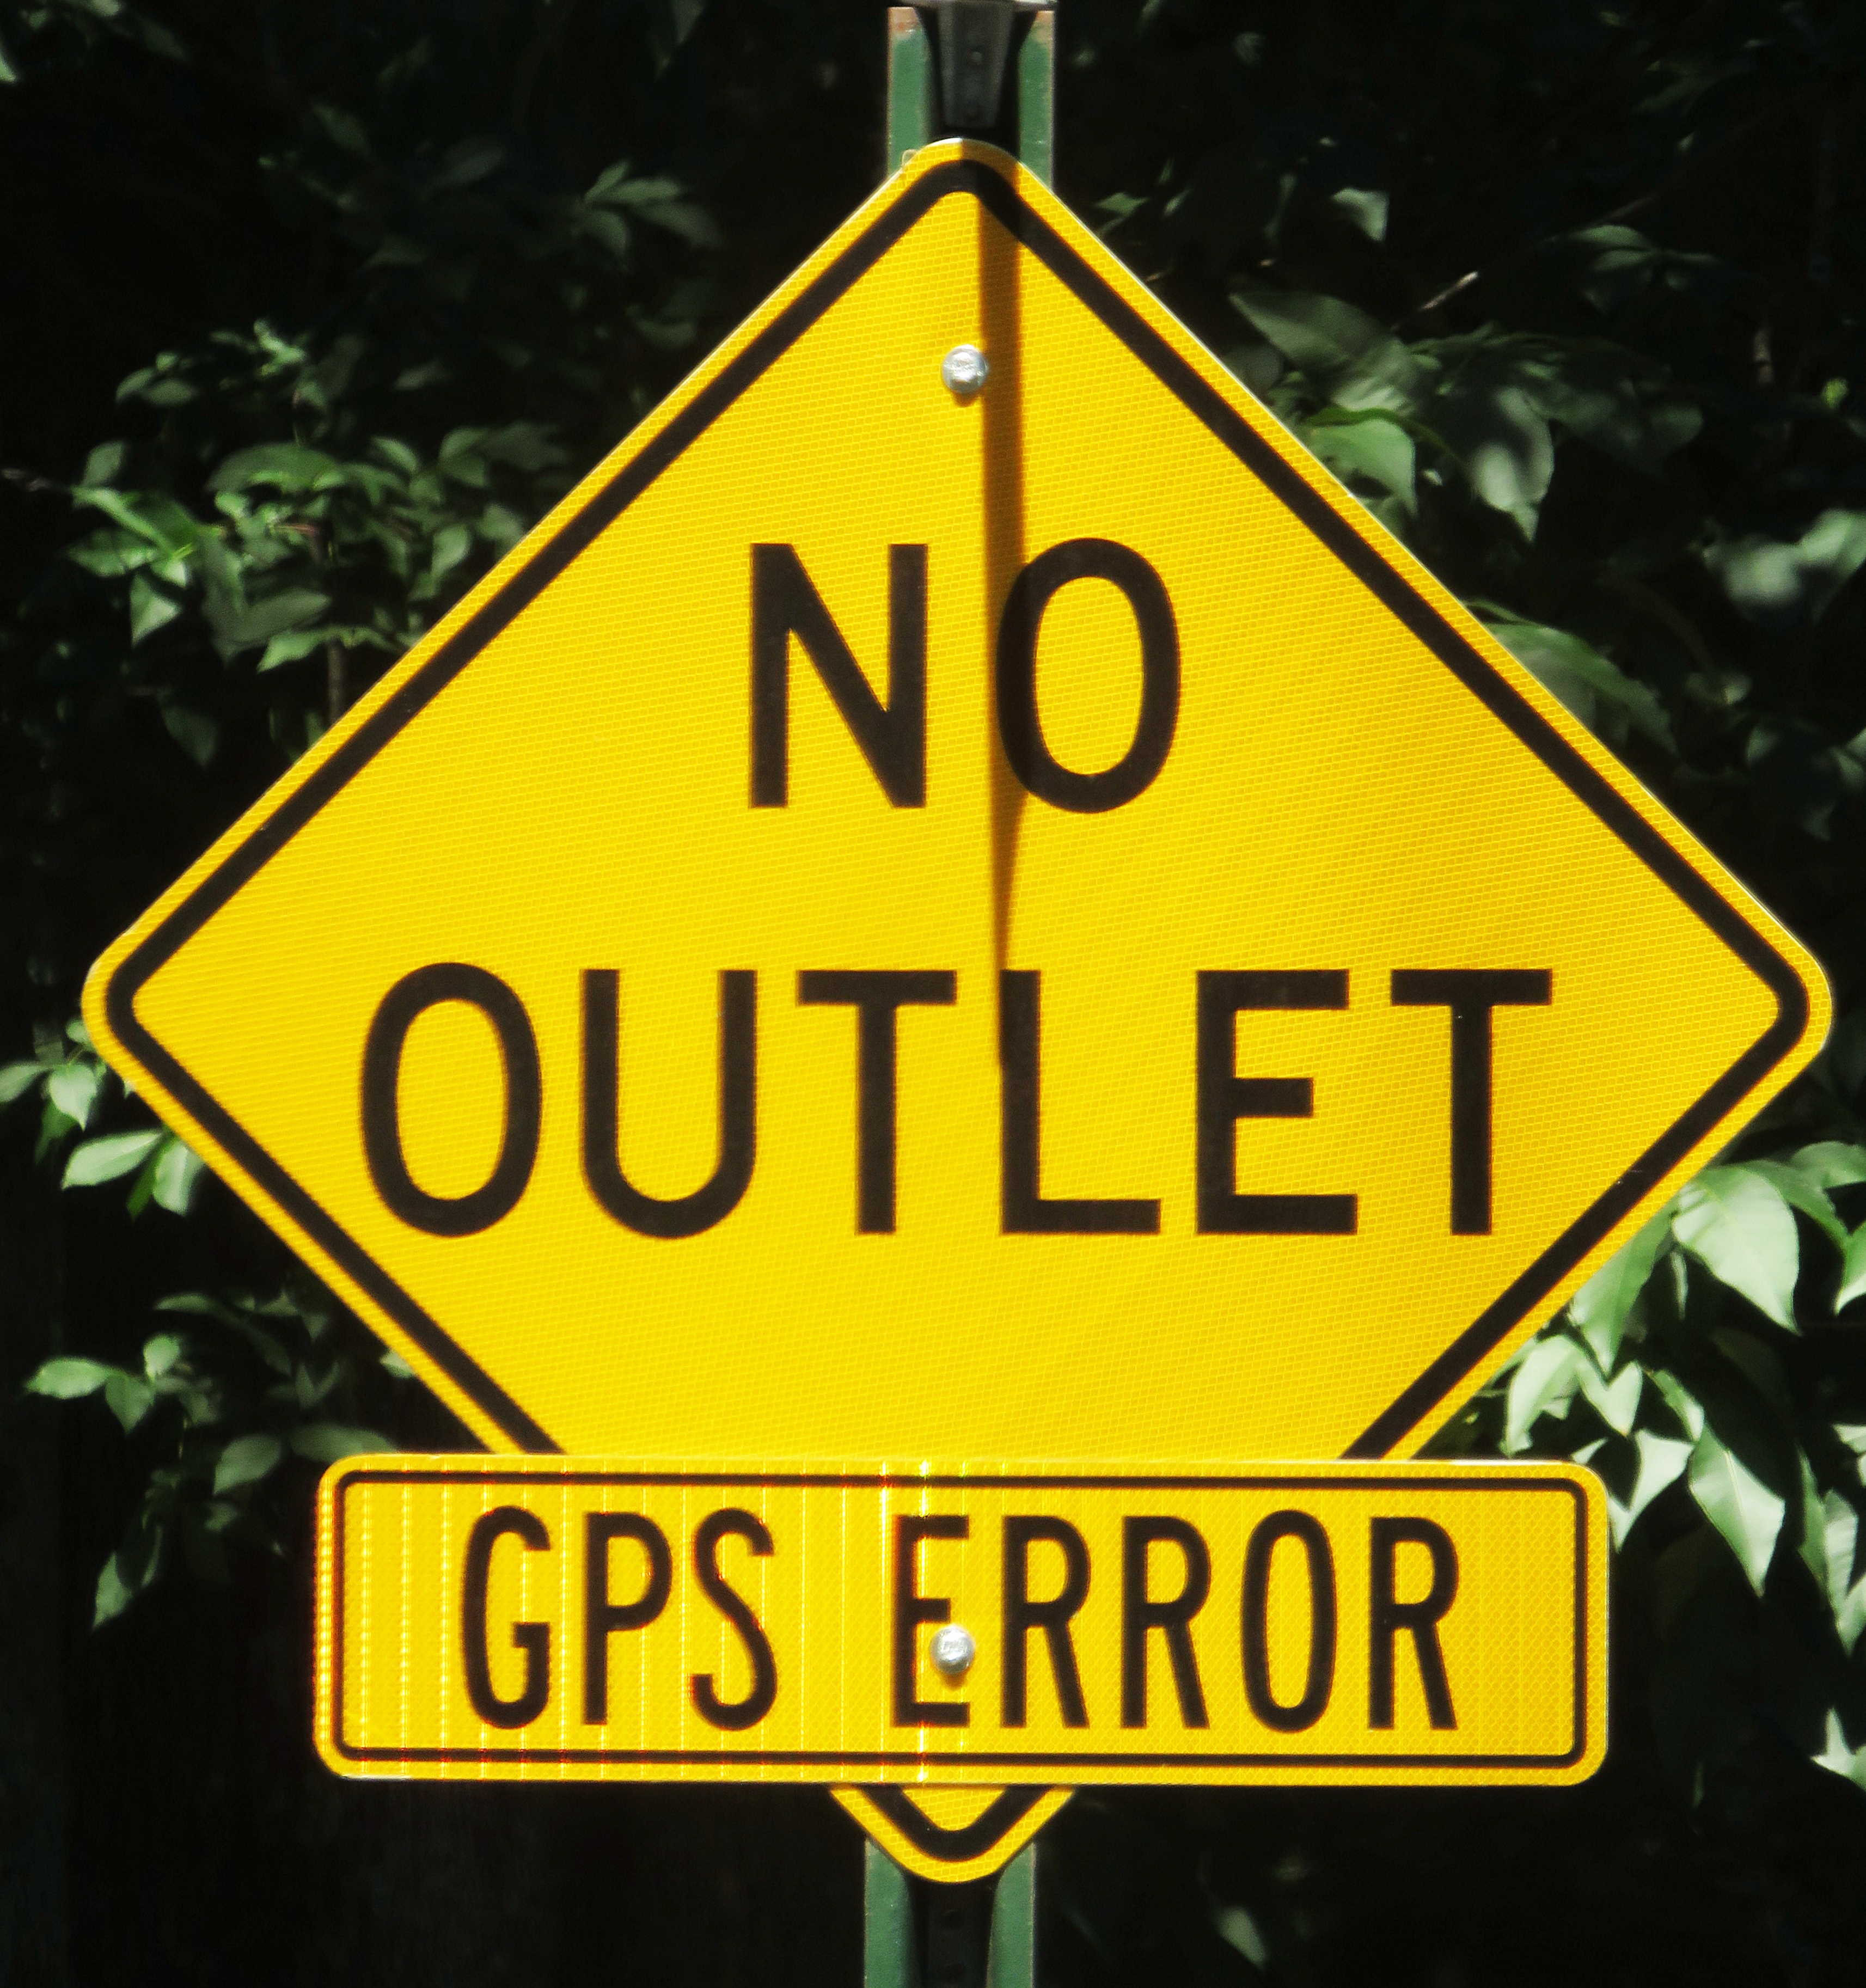 No Outlet - GPS Error sign